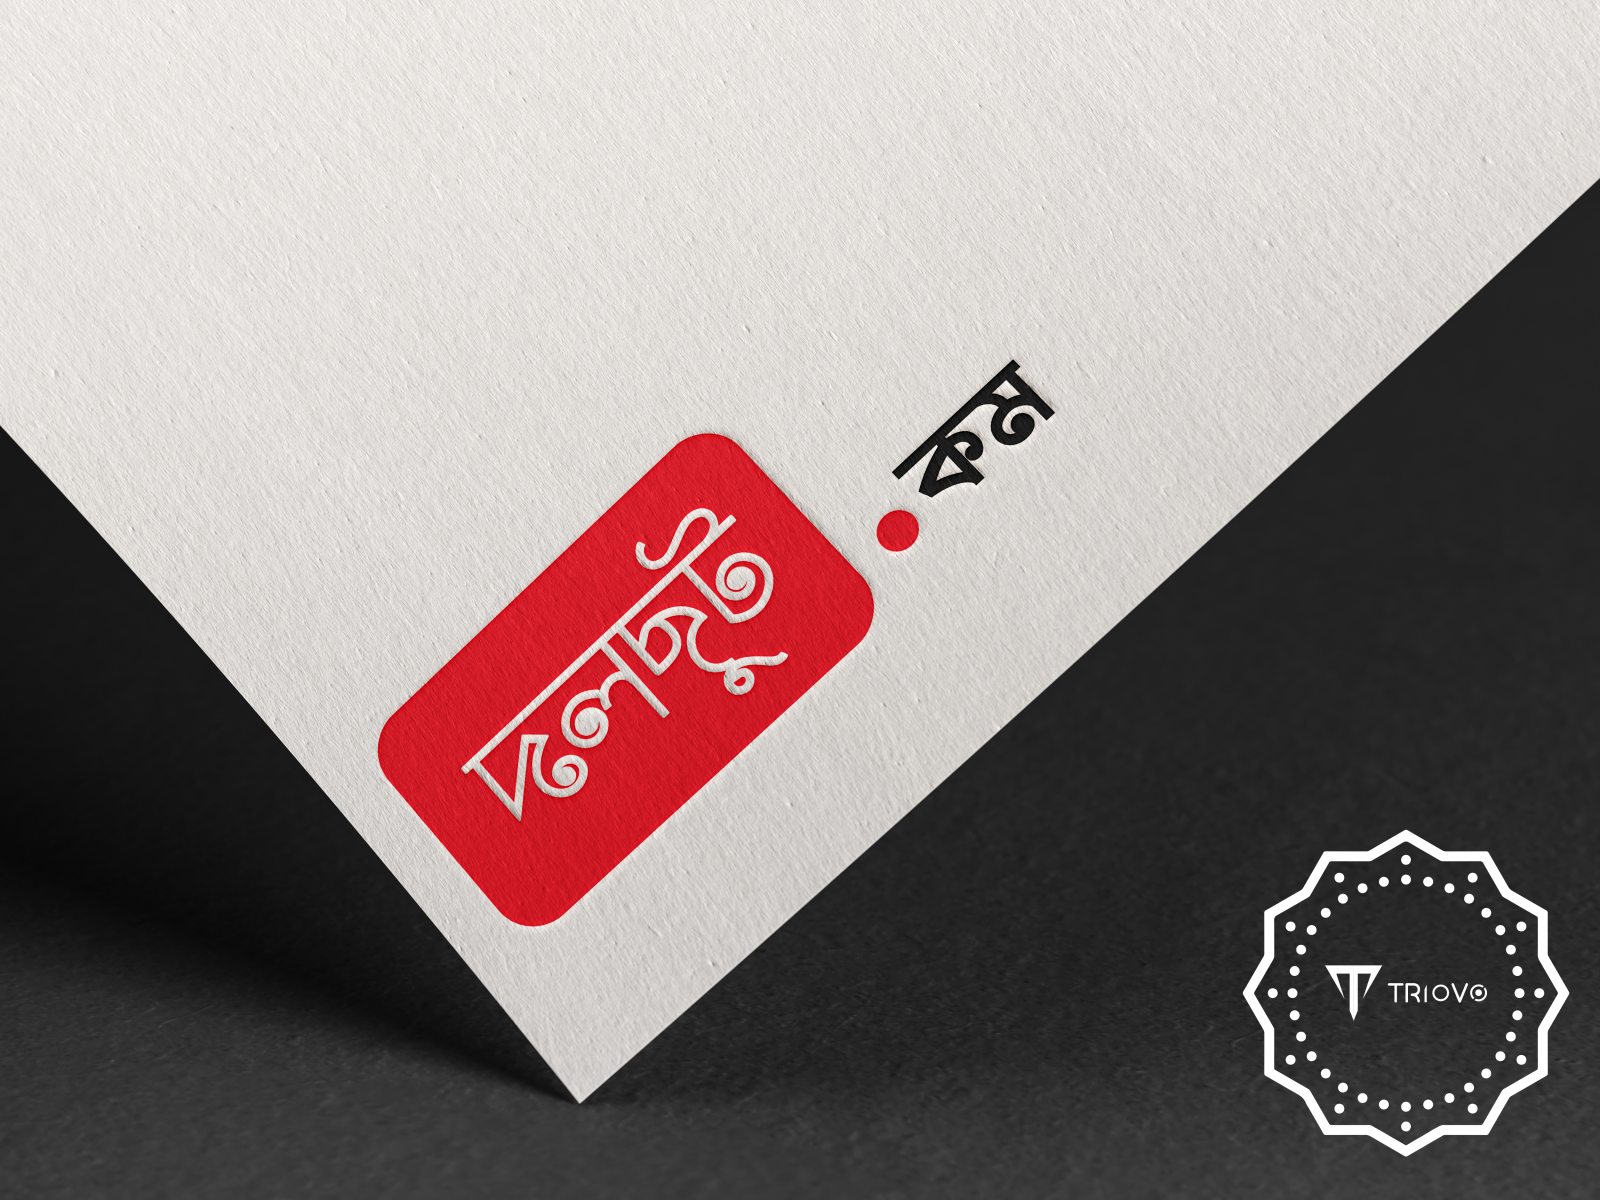 bangla logo design online free